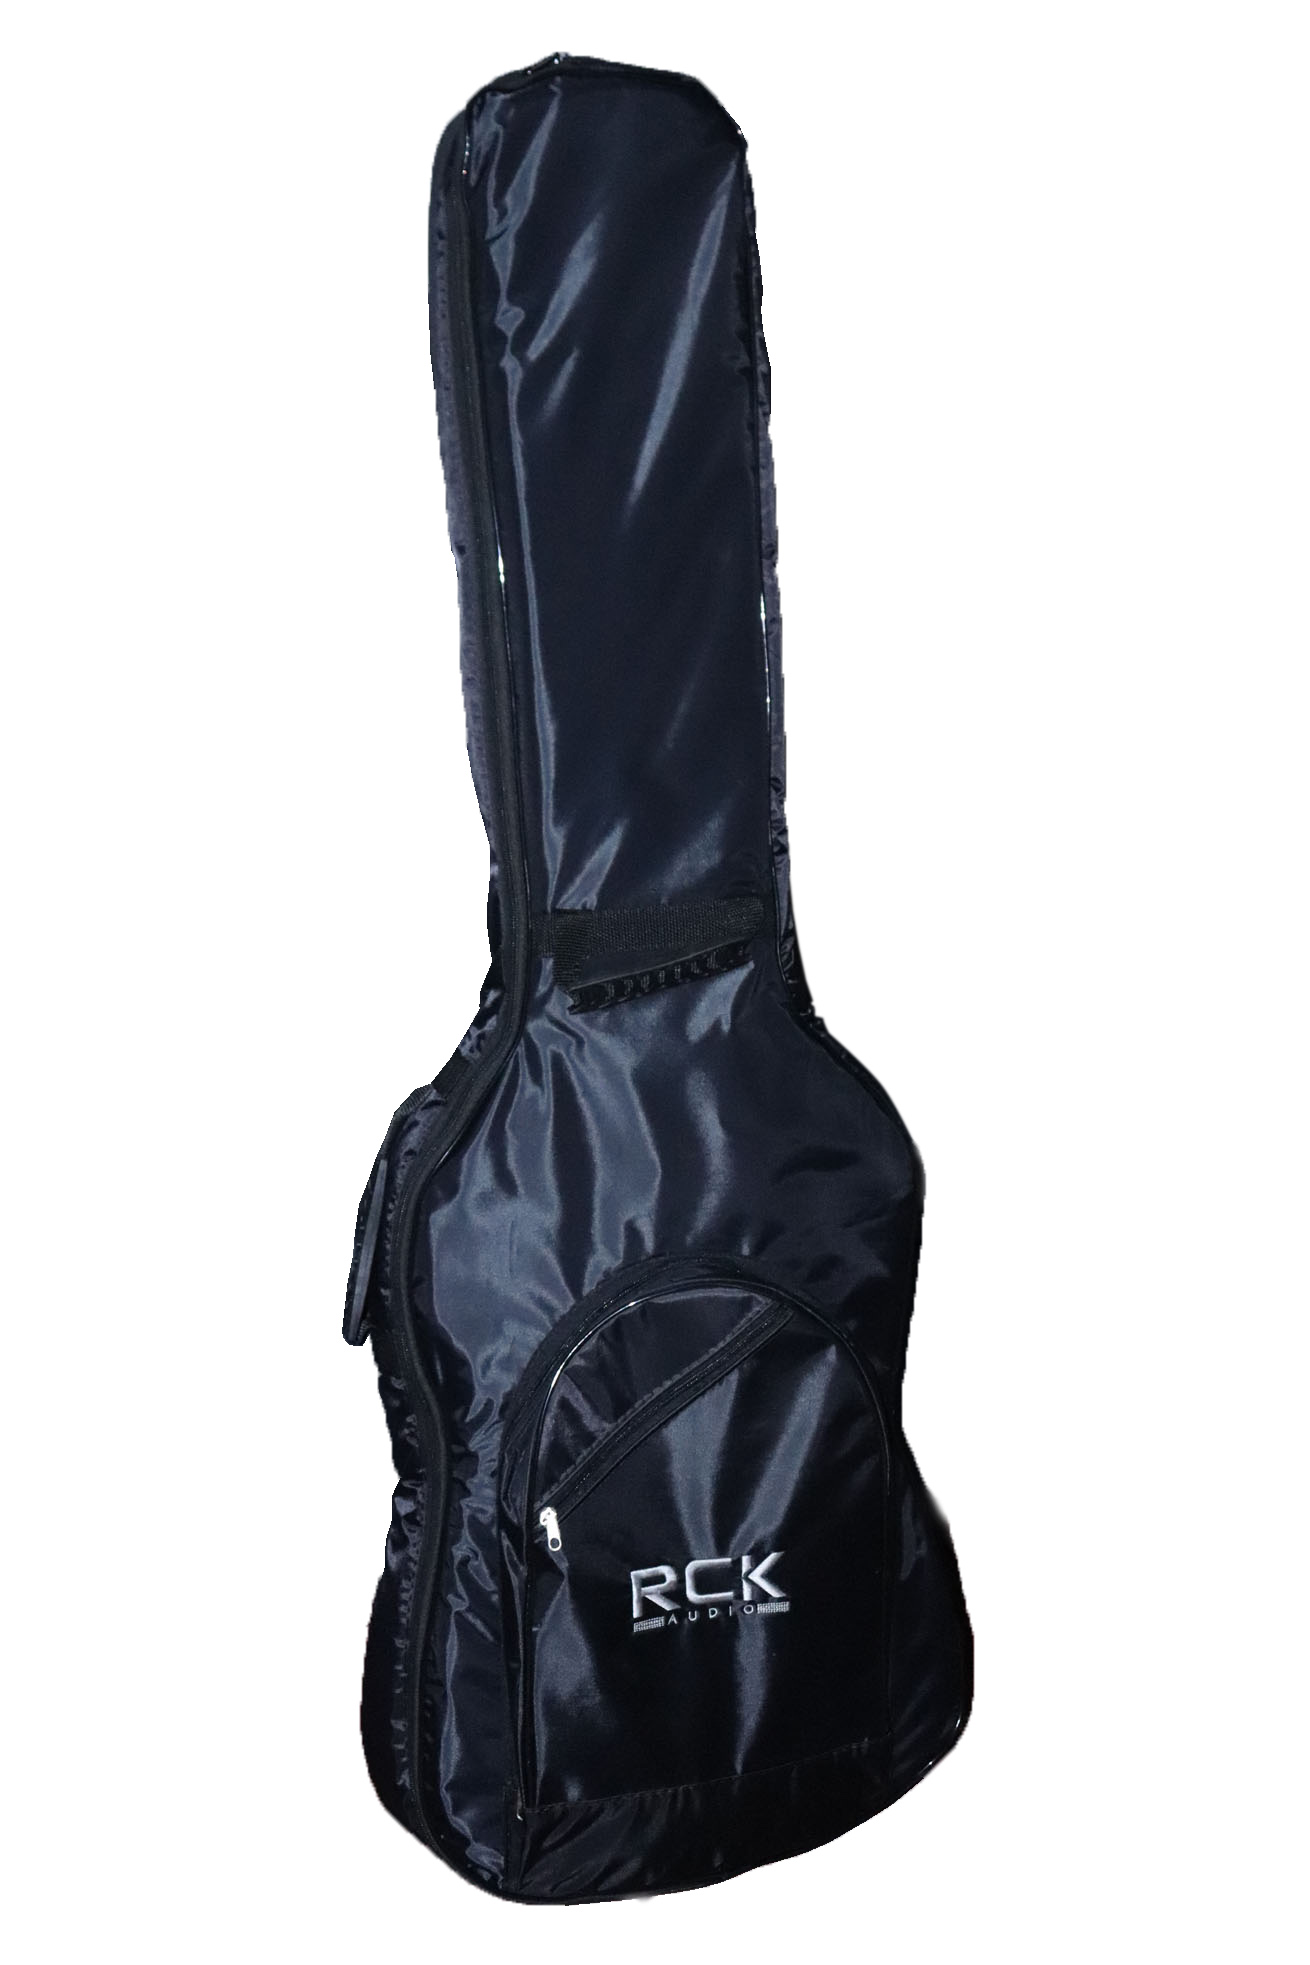 Capa Bag Contrabaixo Champion Super Luxo RCK Audio